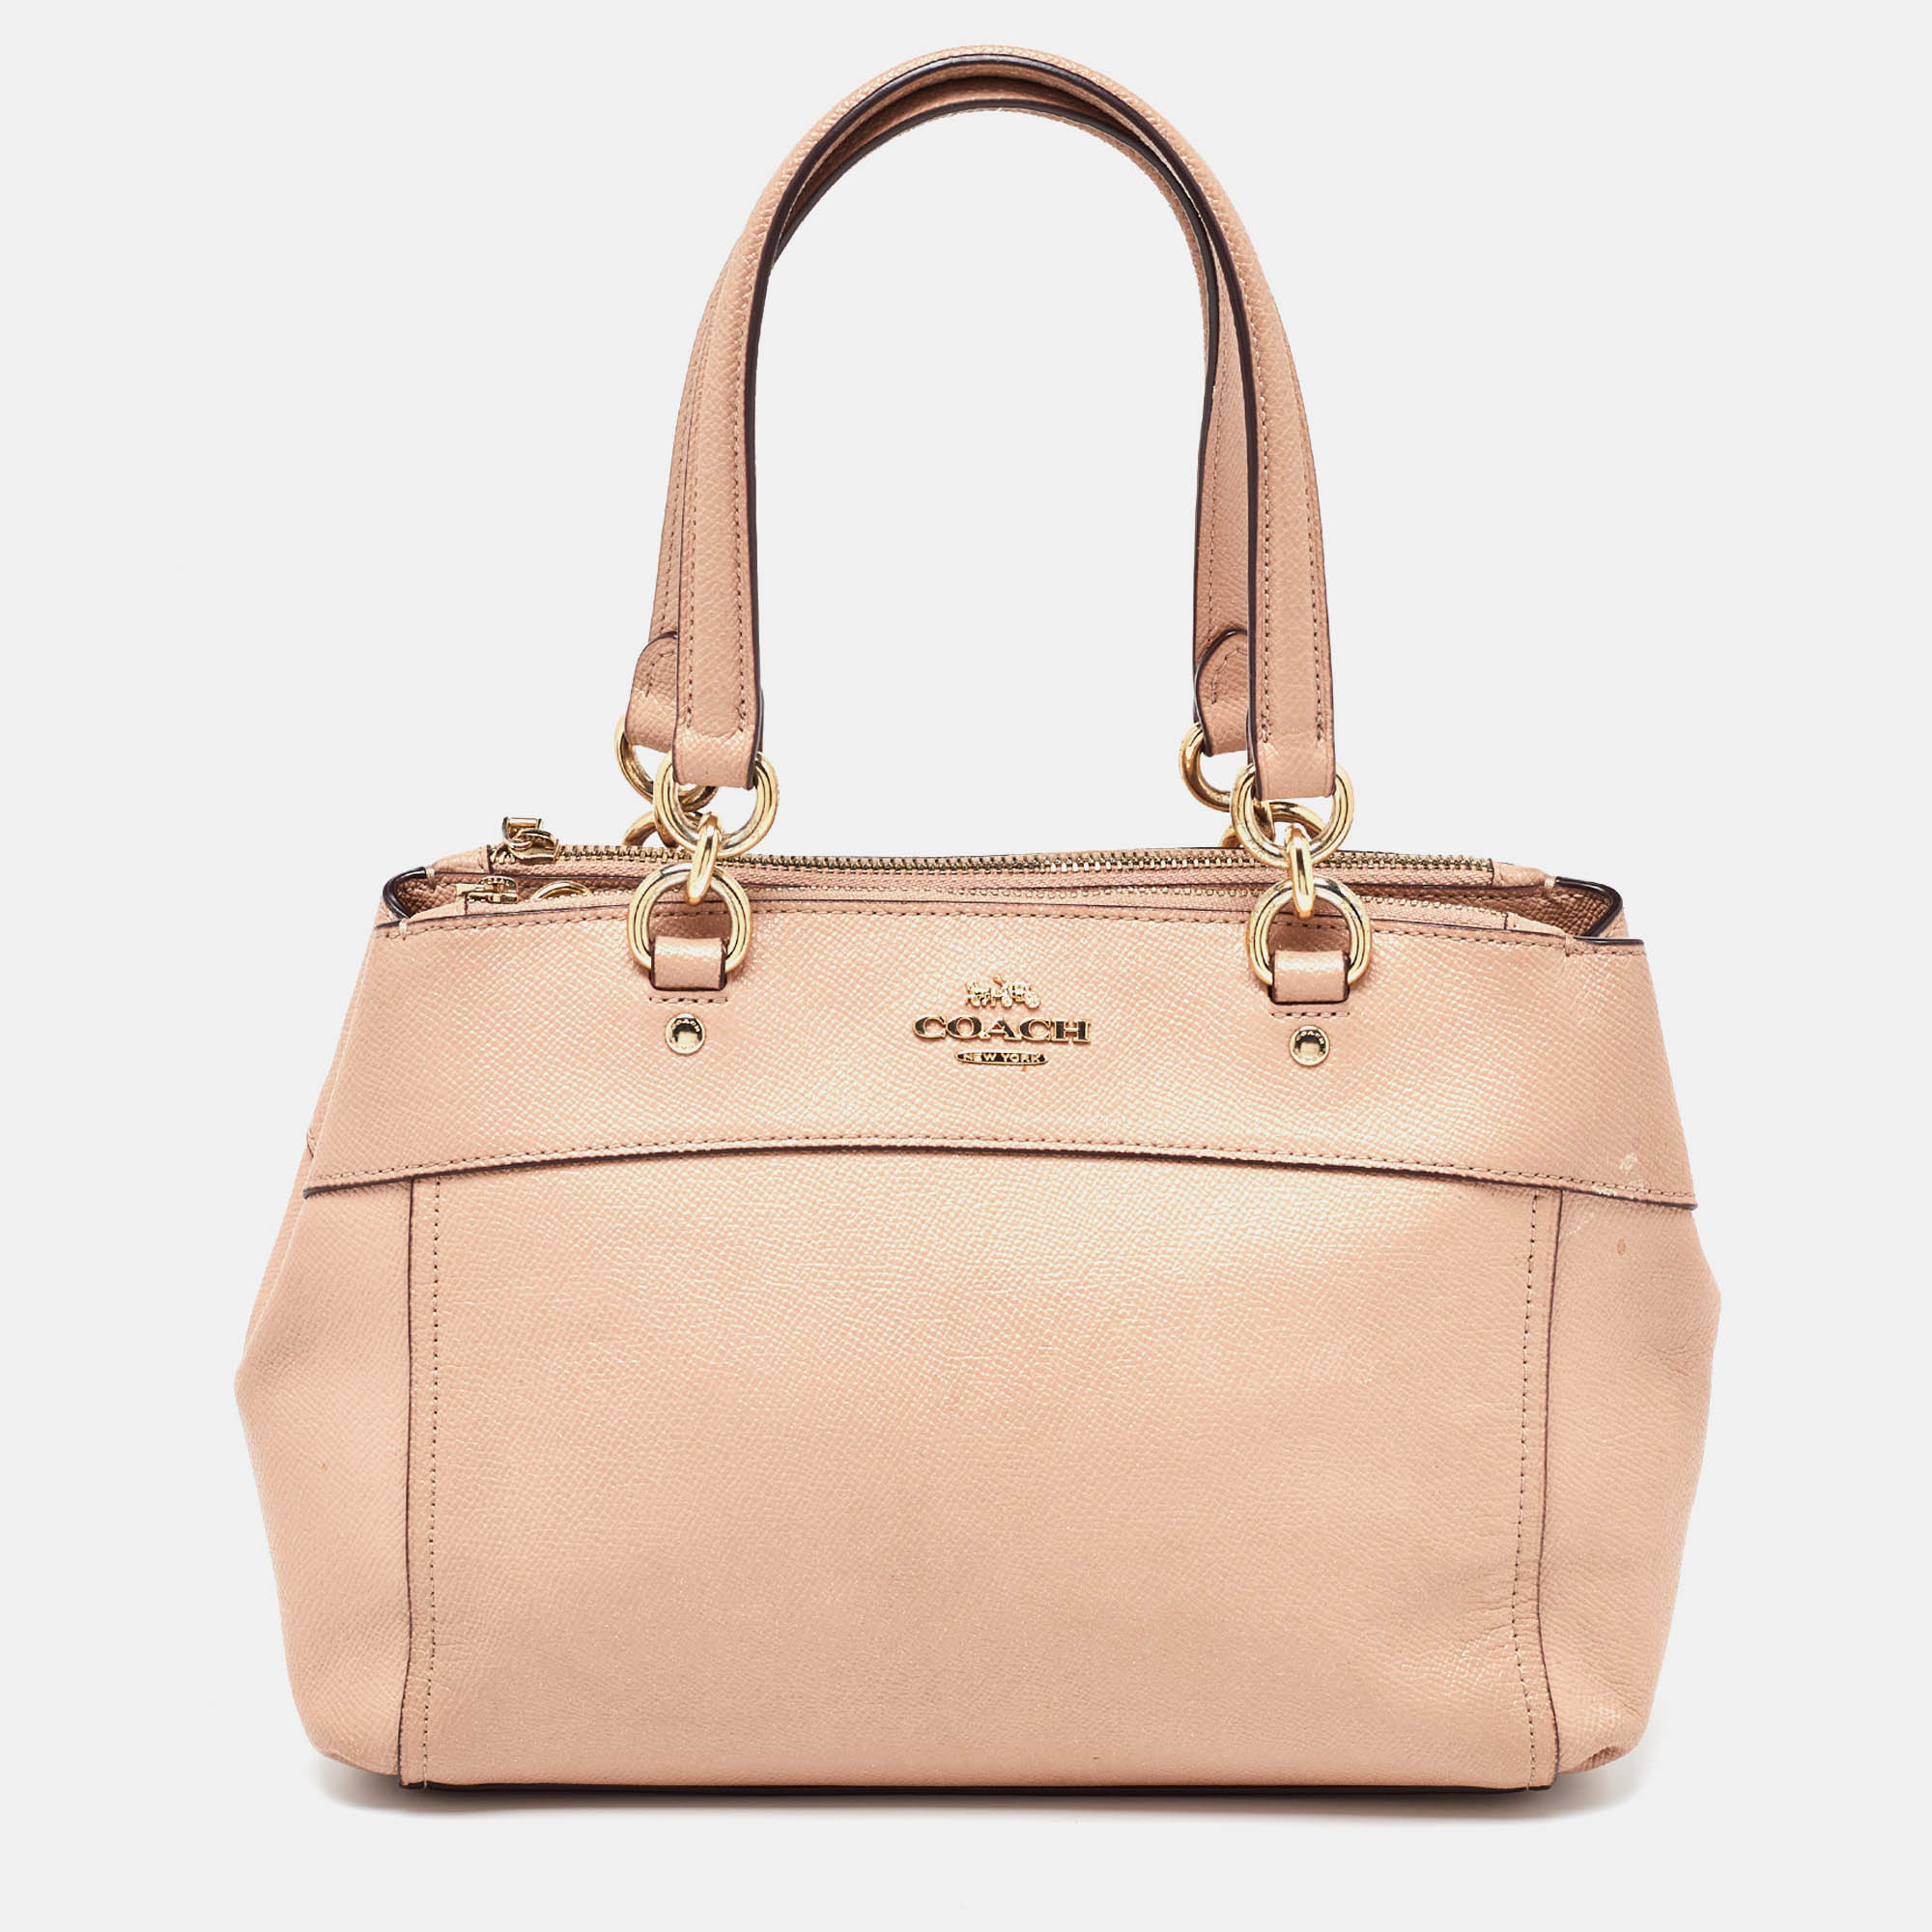 Coach peach leather mini brooke carryall satchel